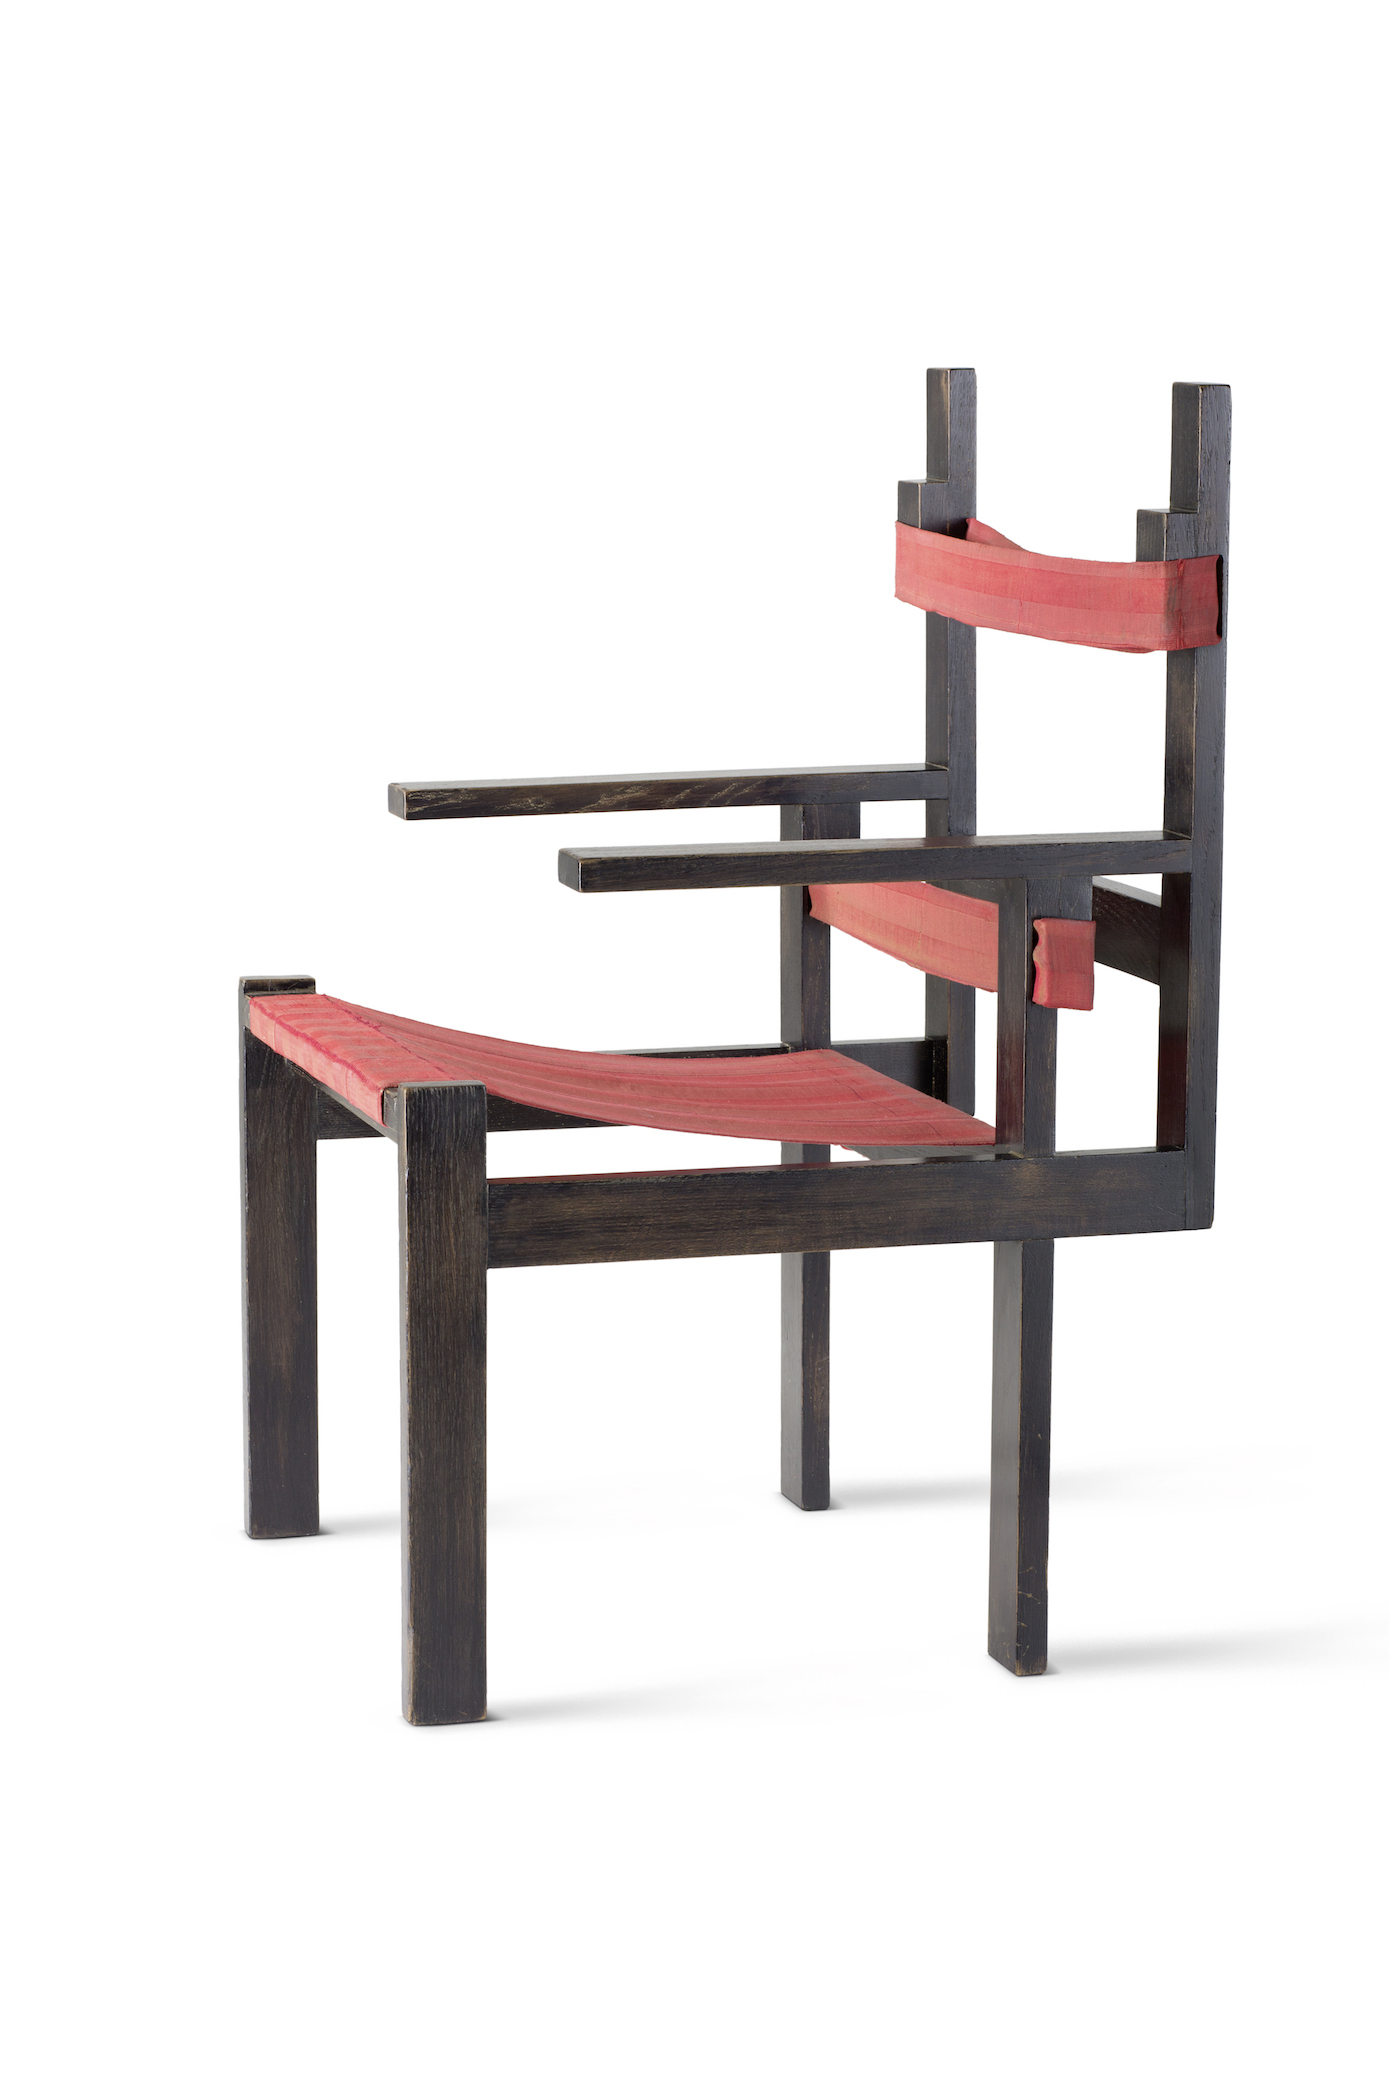 Marcel Breuer, lath chair, ti 1a, 1922. Collection Vitra Design Museum. Photo: © Vitra Design Museum, Jürgen Hans.